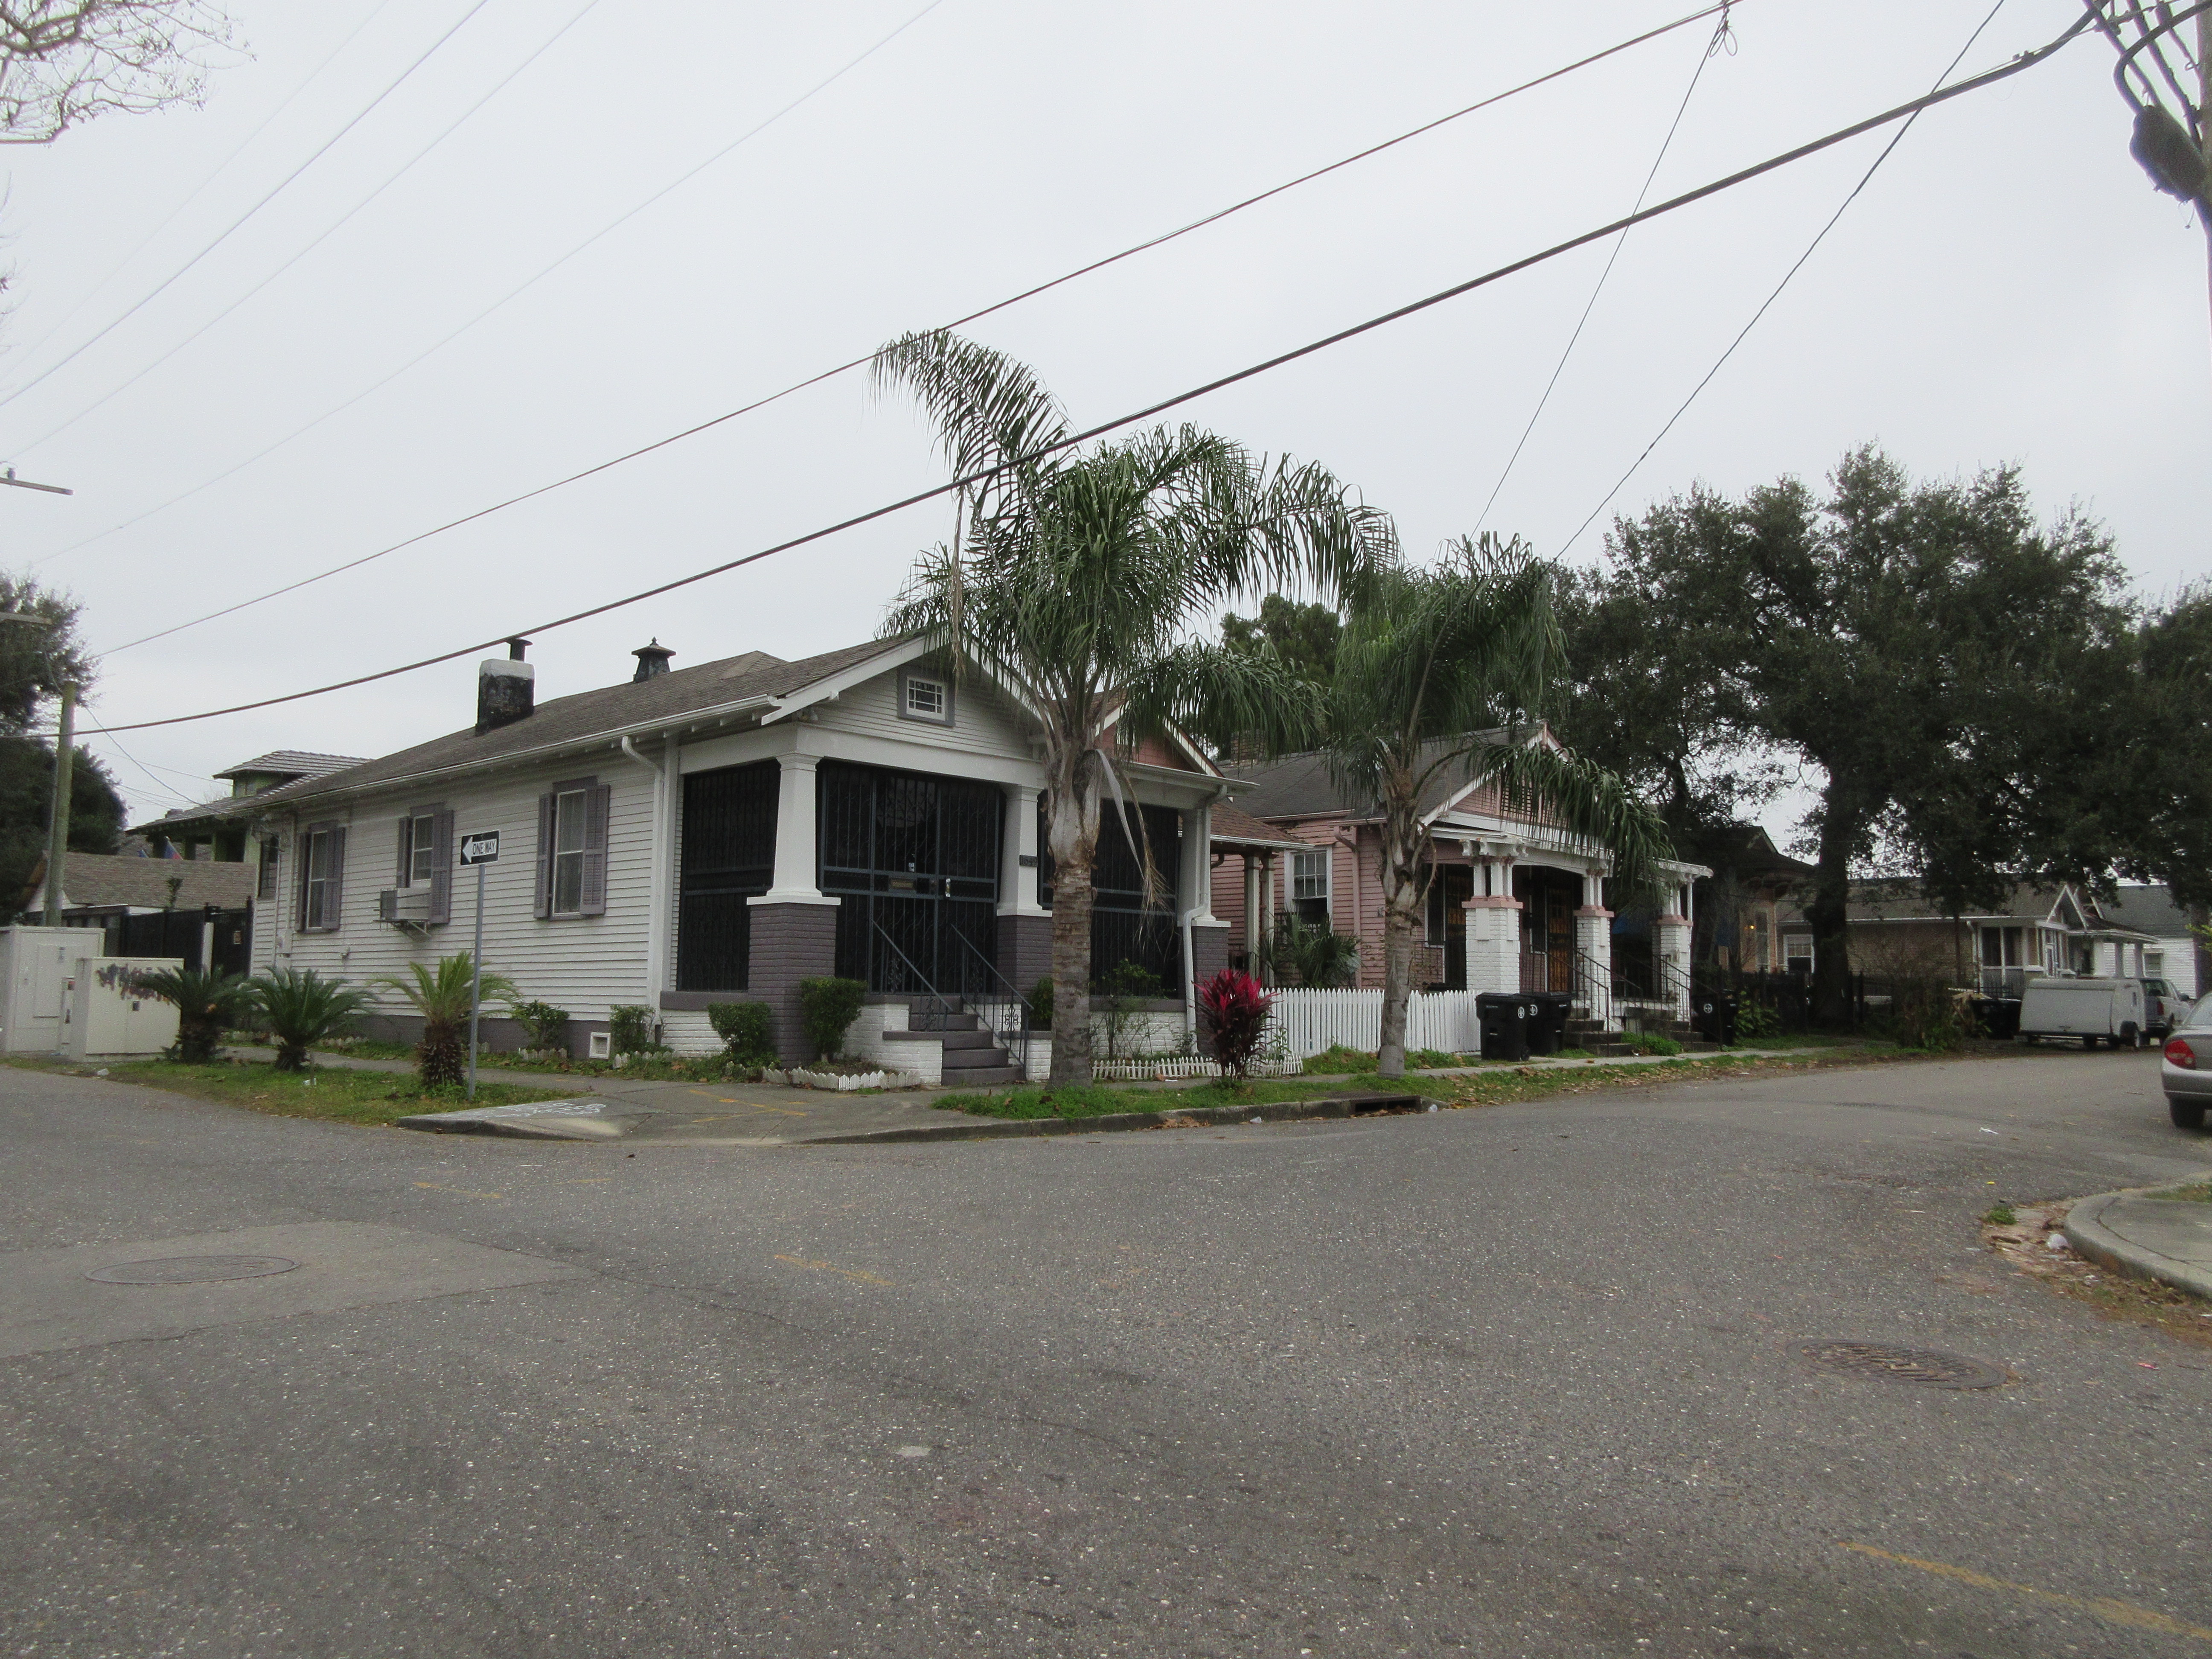 7th Ward Houses Palms New Orleans.jpg. 